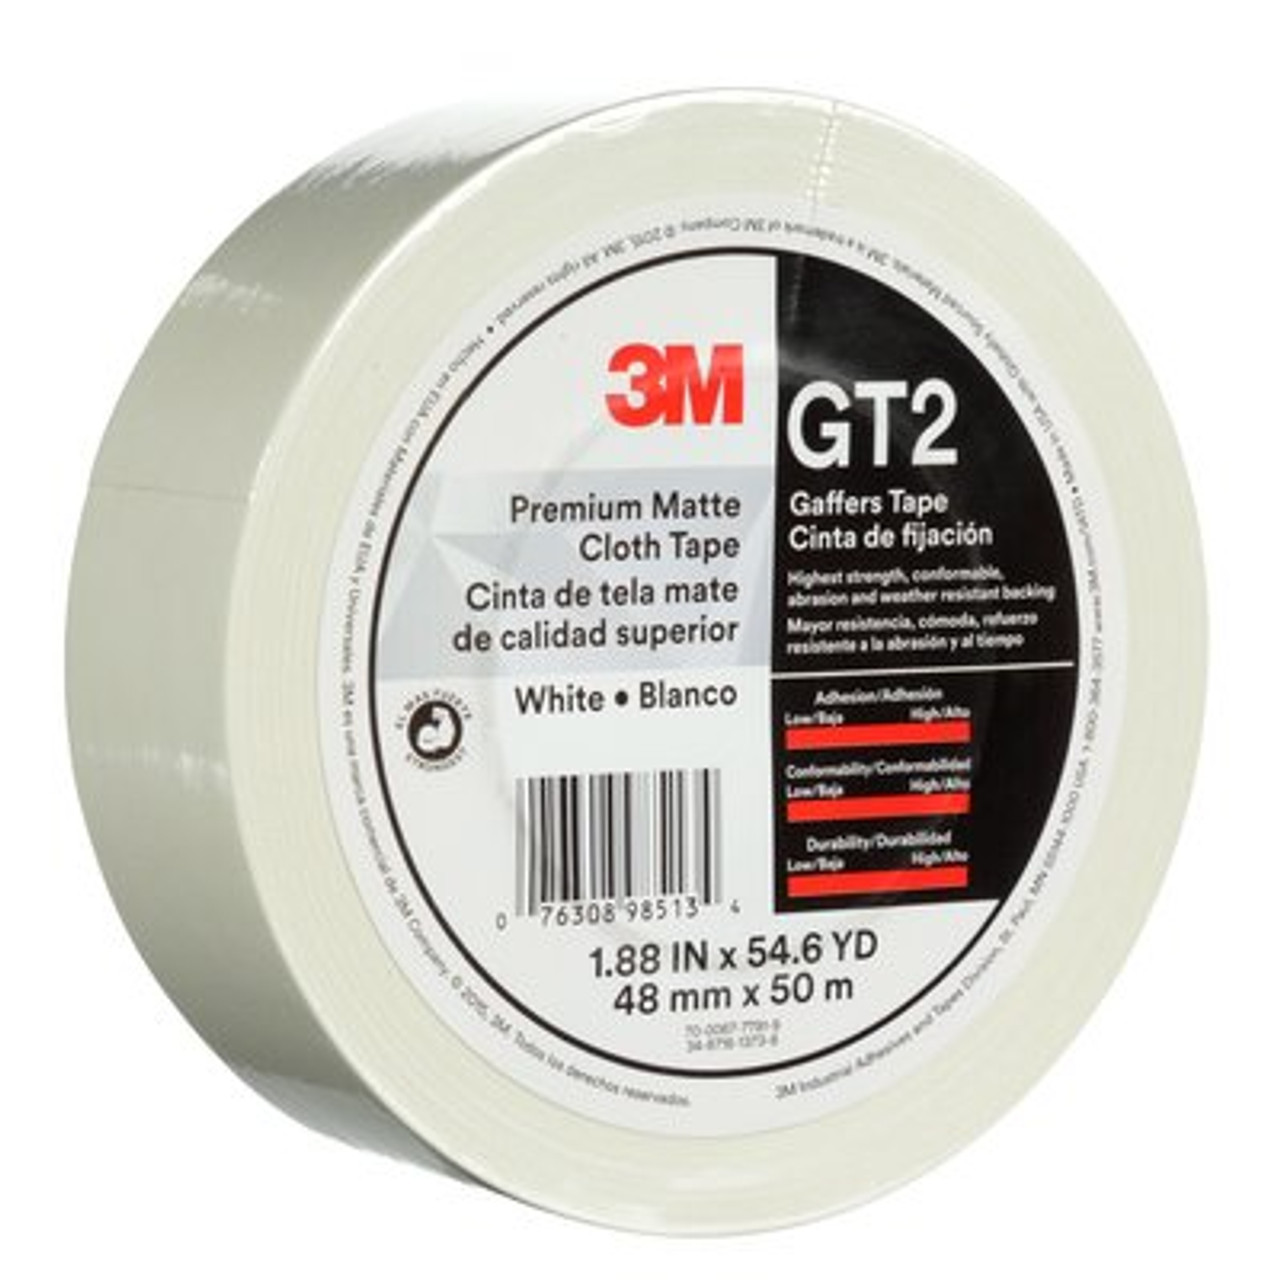 3M™ Premium Matte Cloth (Gaffers) Tape GT2, White, 48 mm x 50 m 11 mil